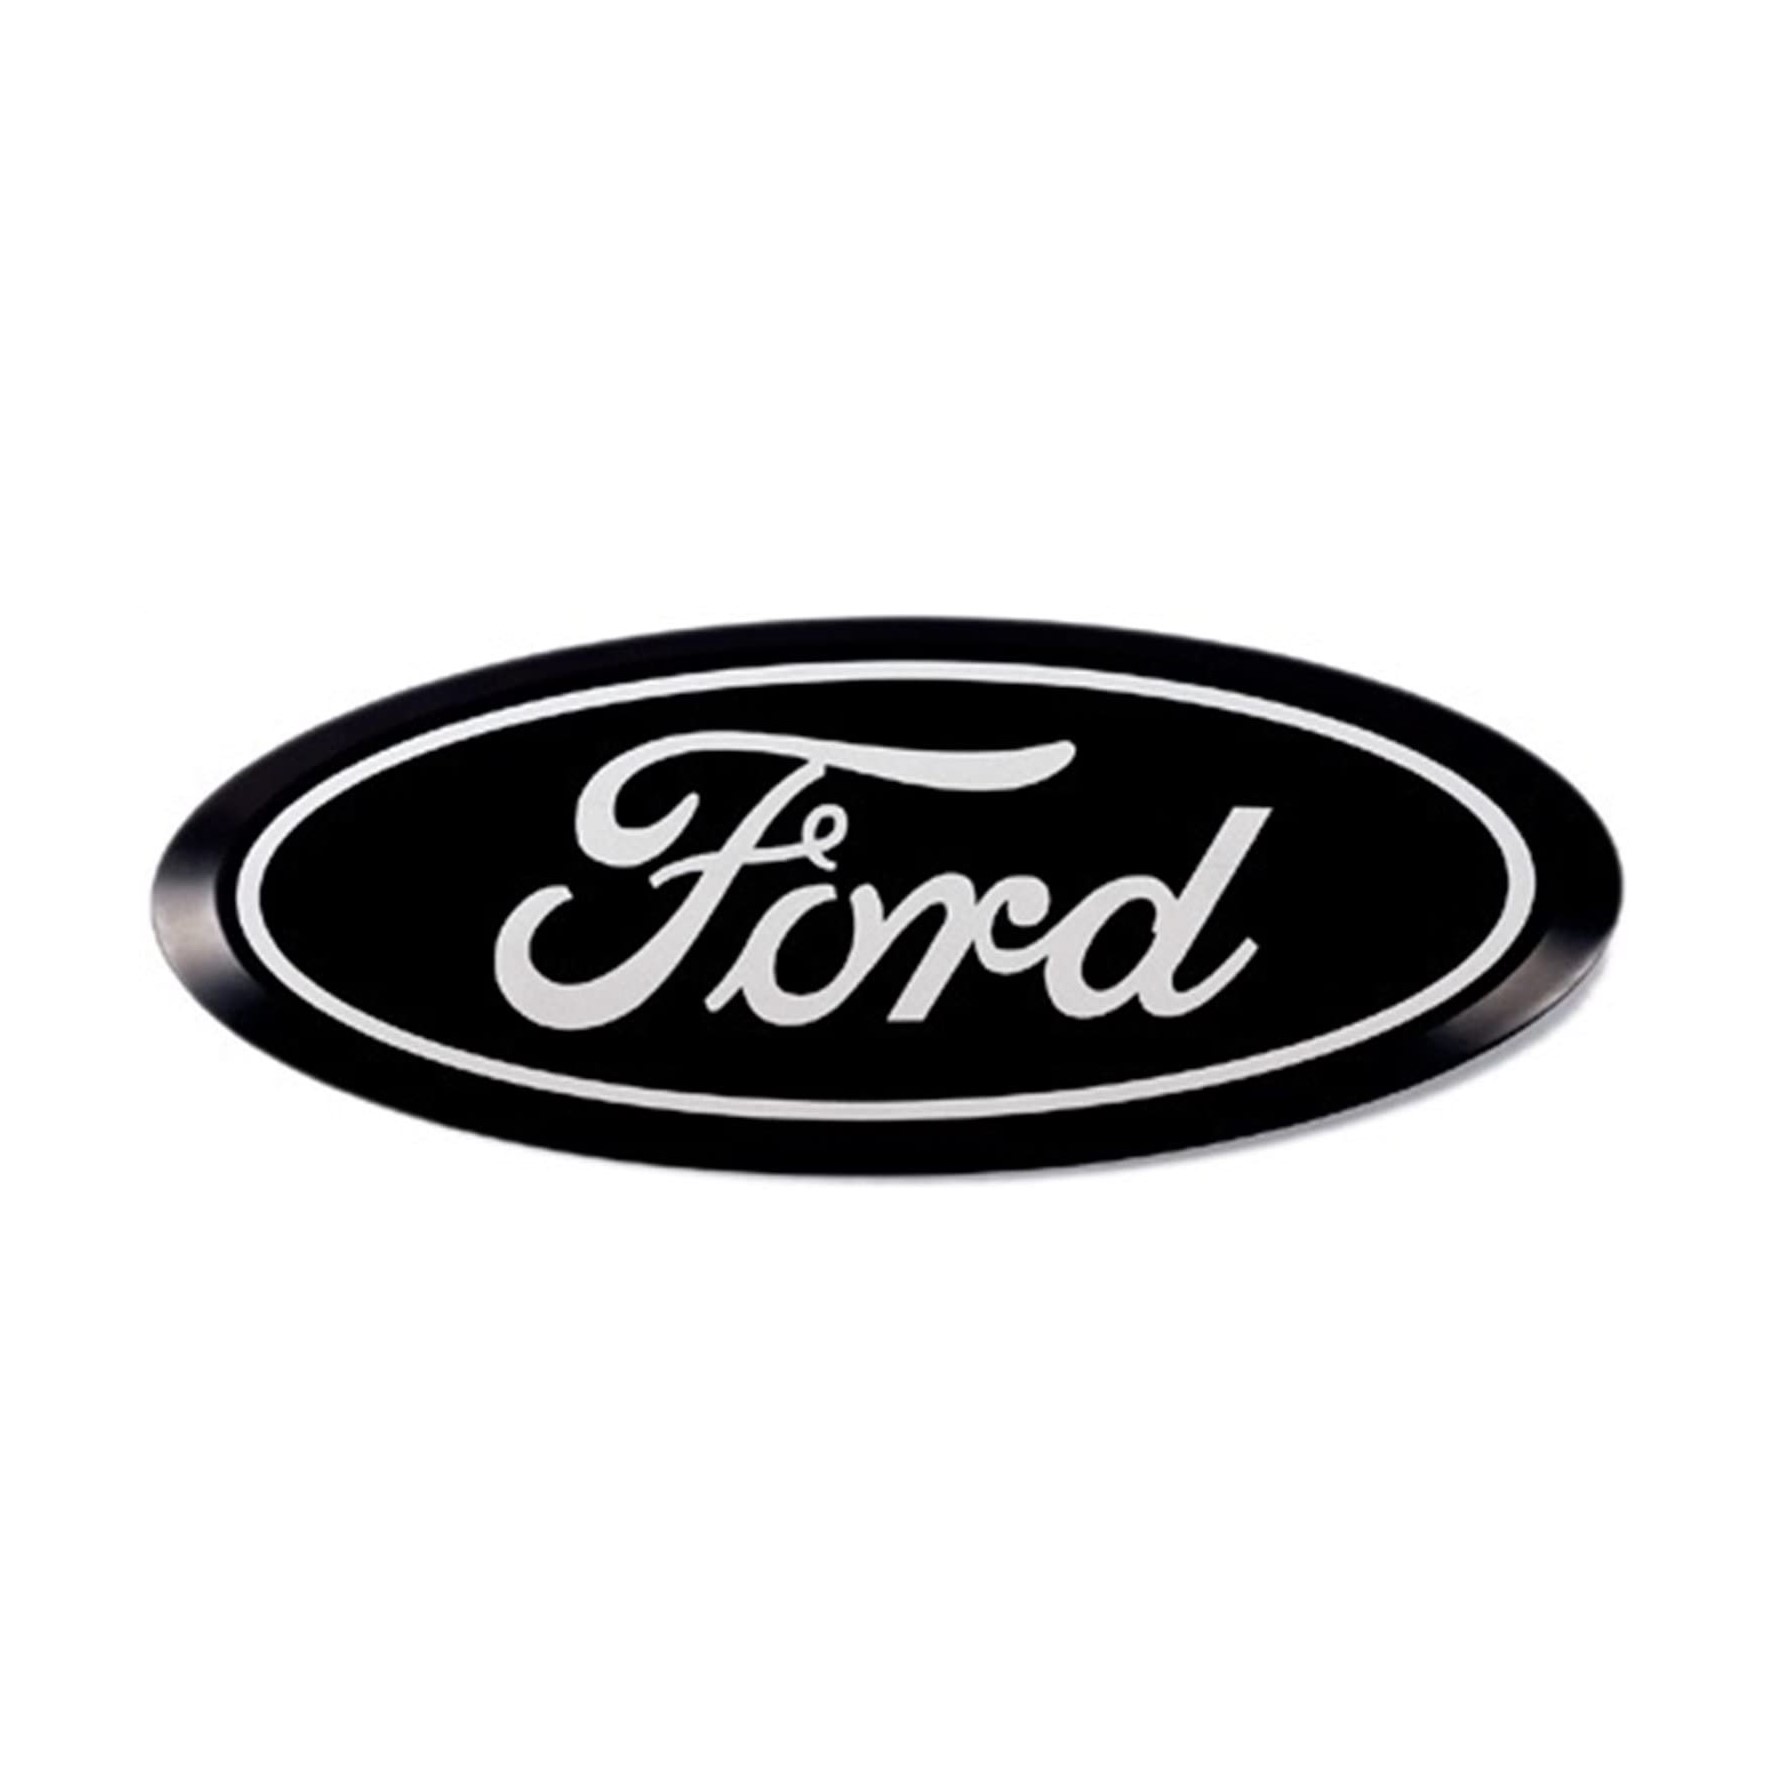 92300F - Putco Black Grille Ford Oval Logo Emblem Kits- Fits Ford